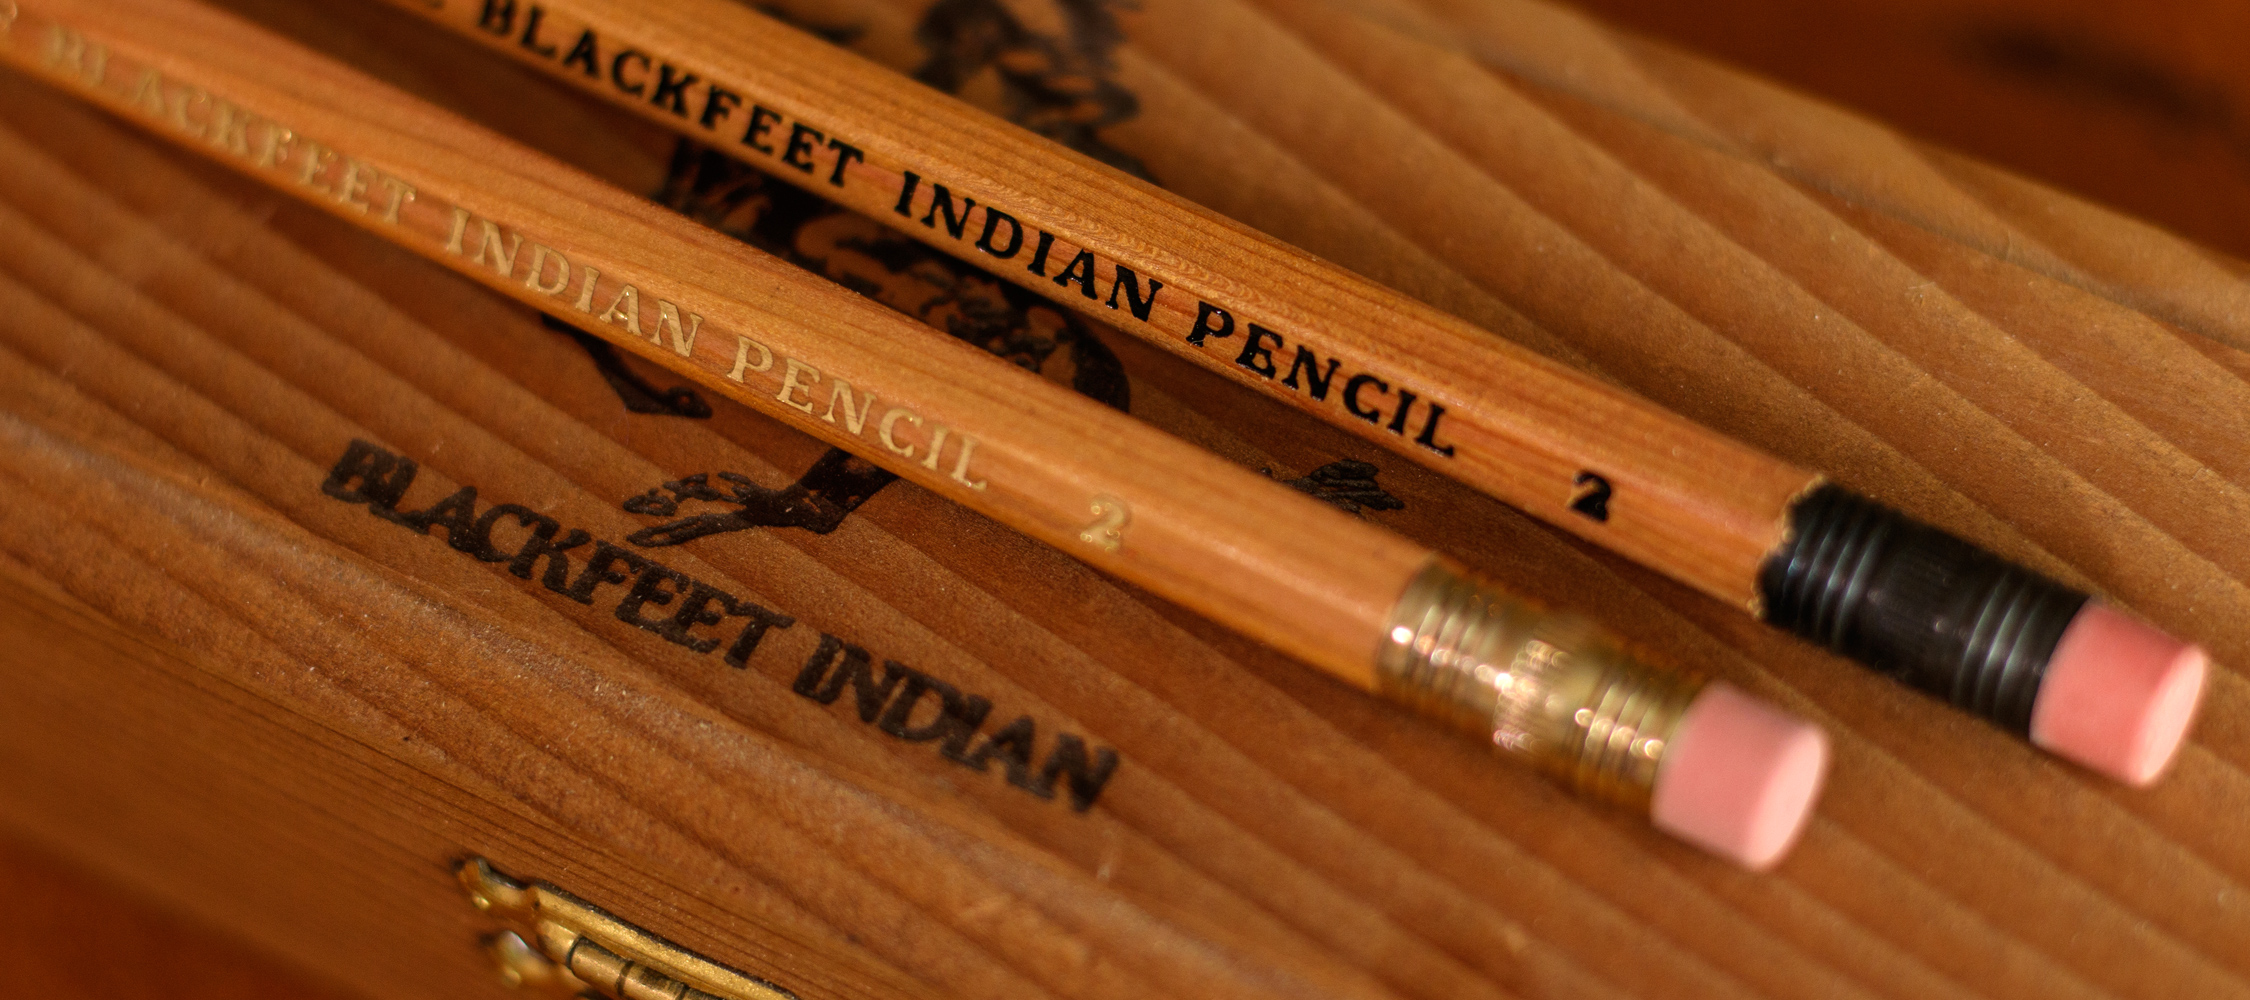 Blackfeet pencils on wooden box